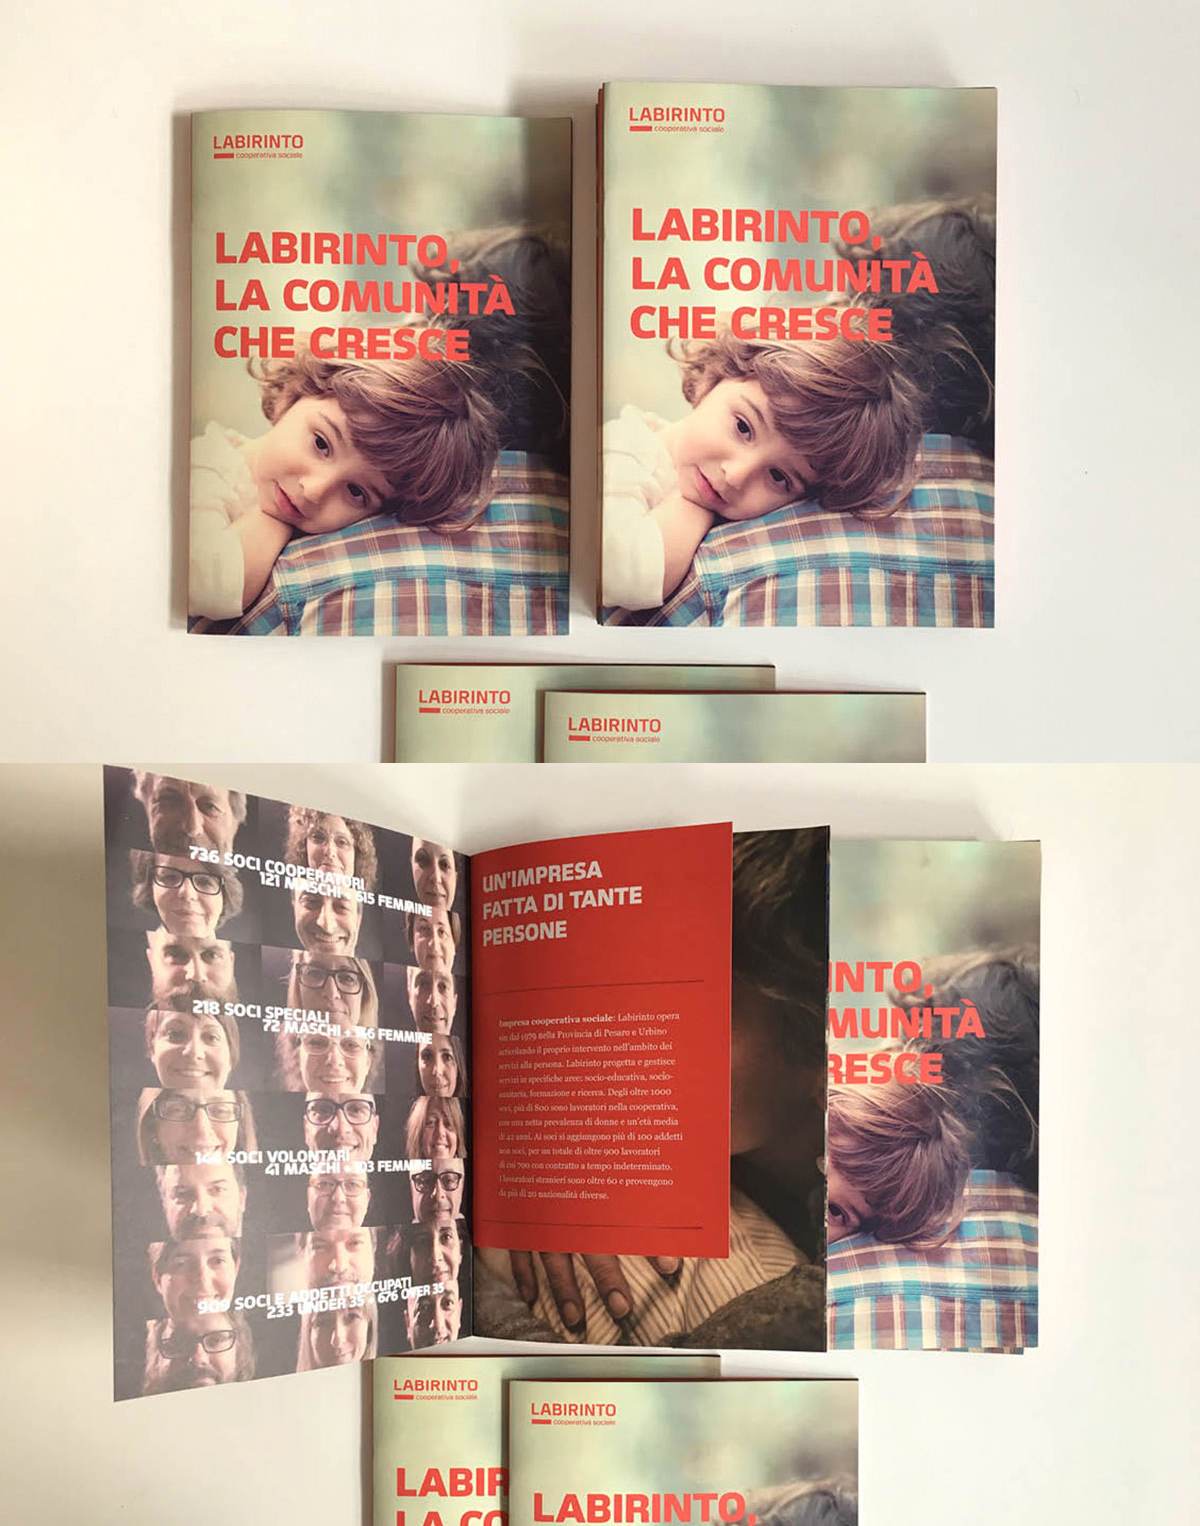 Labirinto - Company profile by Nicola Sancisi - Creative Work